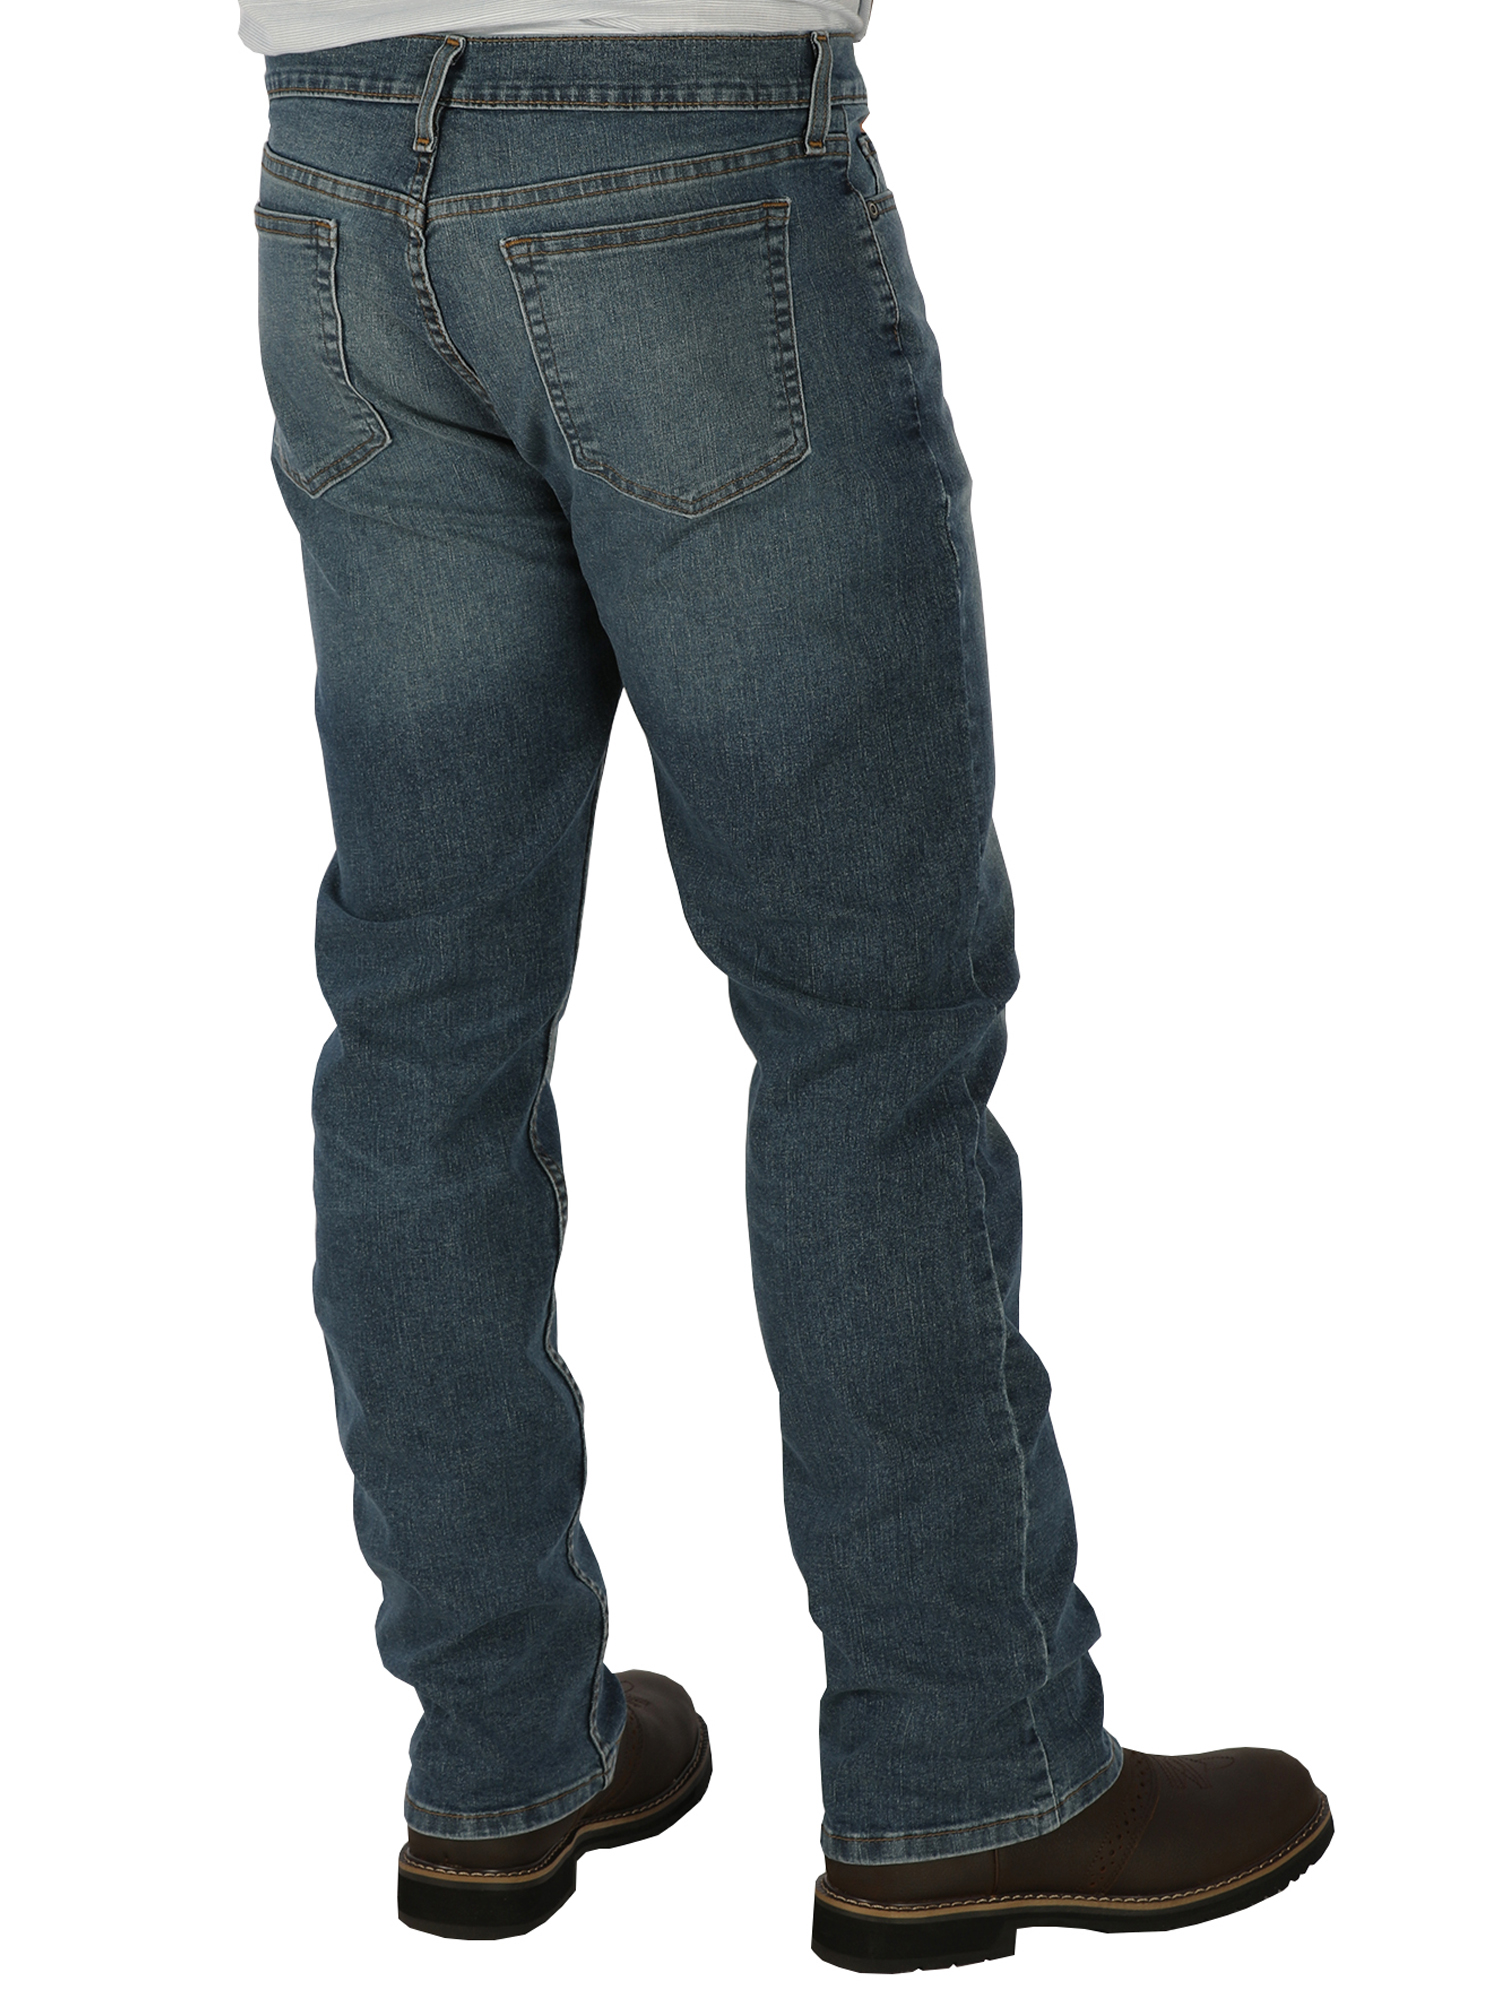 George Men's Bootcut Jeans - Walmart.com